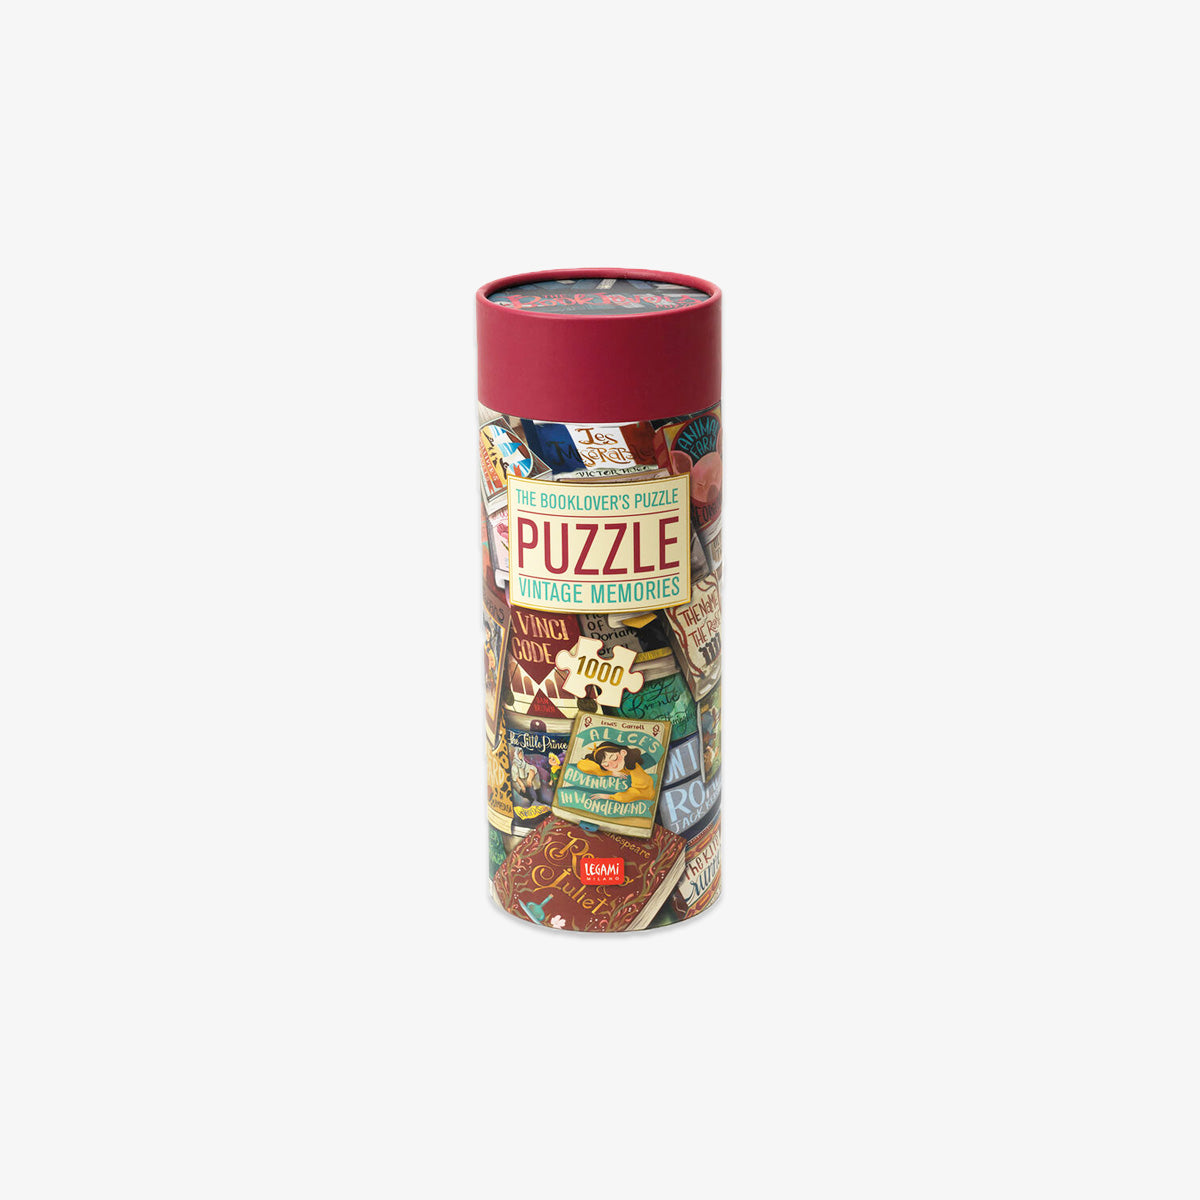 PUZZLE 'THE BOOKLOVER'S PUZZLE' // 1000 PCS